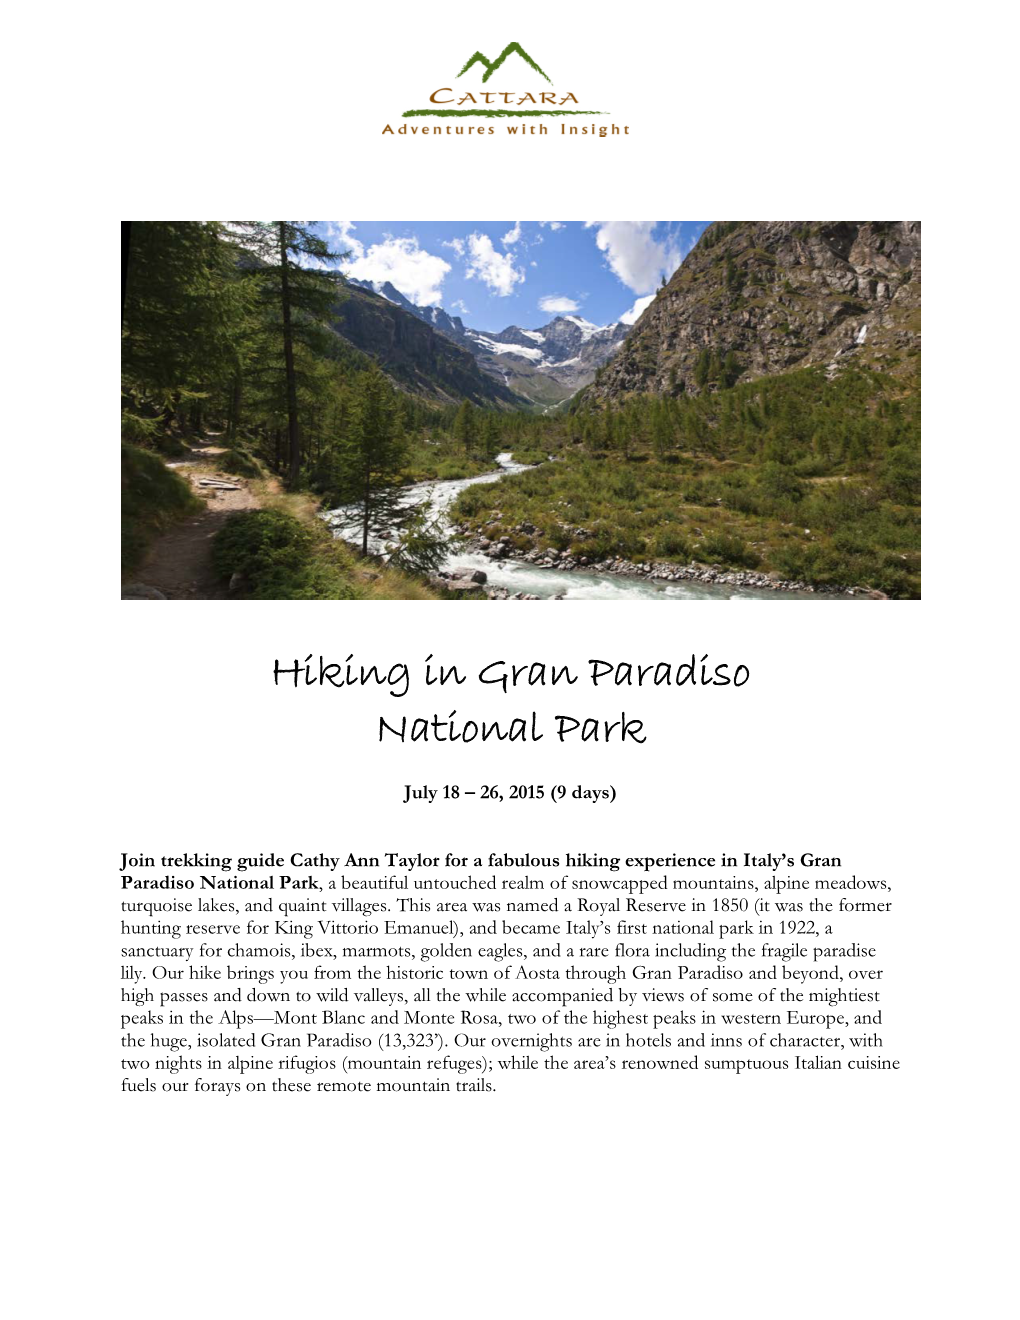 Hiking in Gran Paradiso National Park